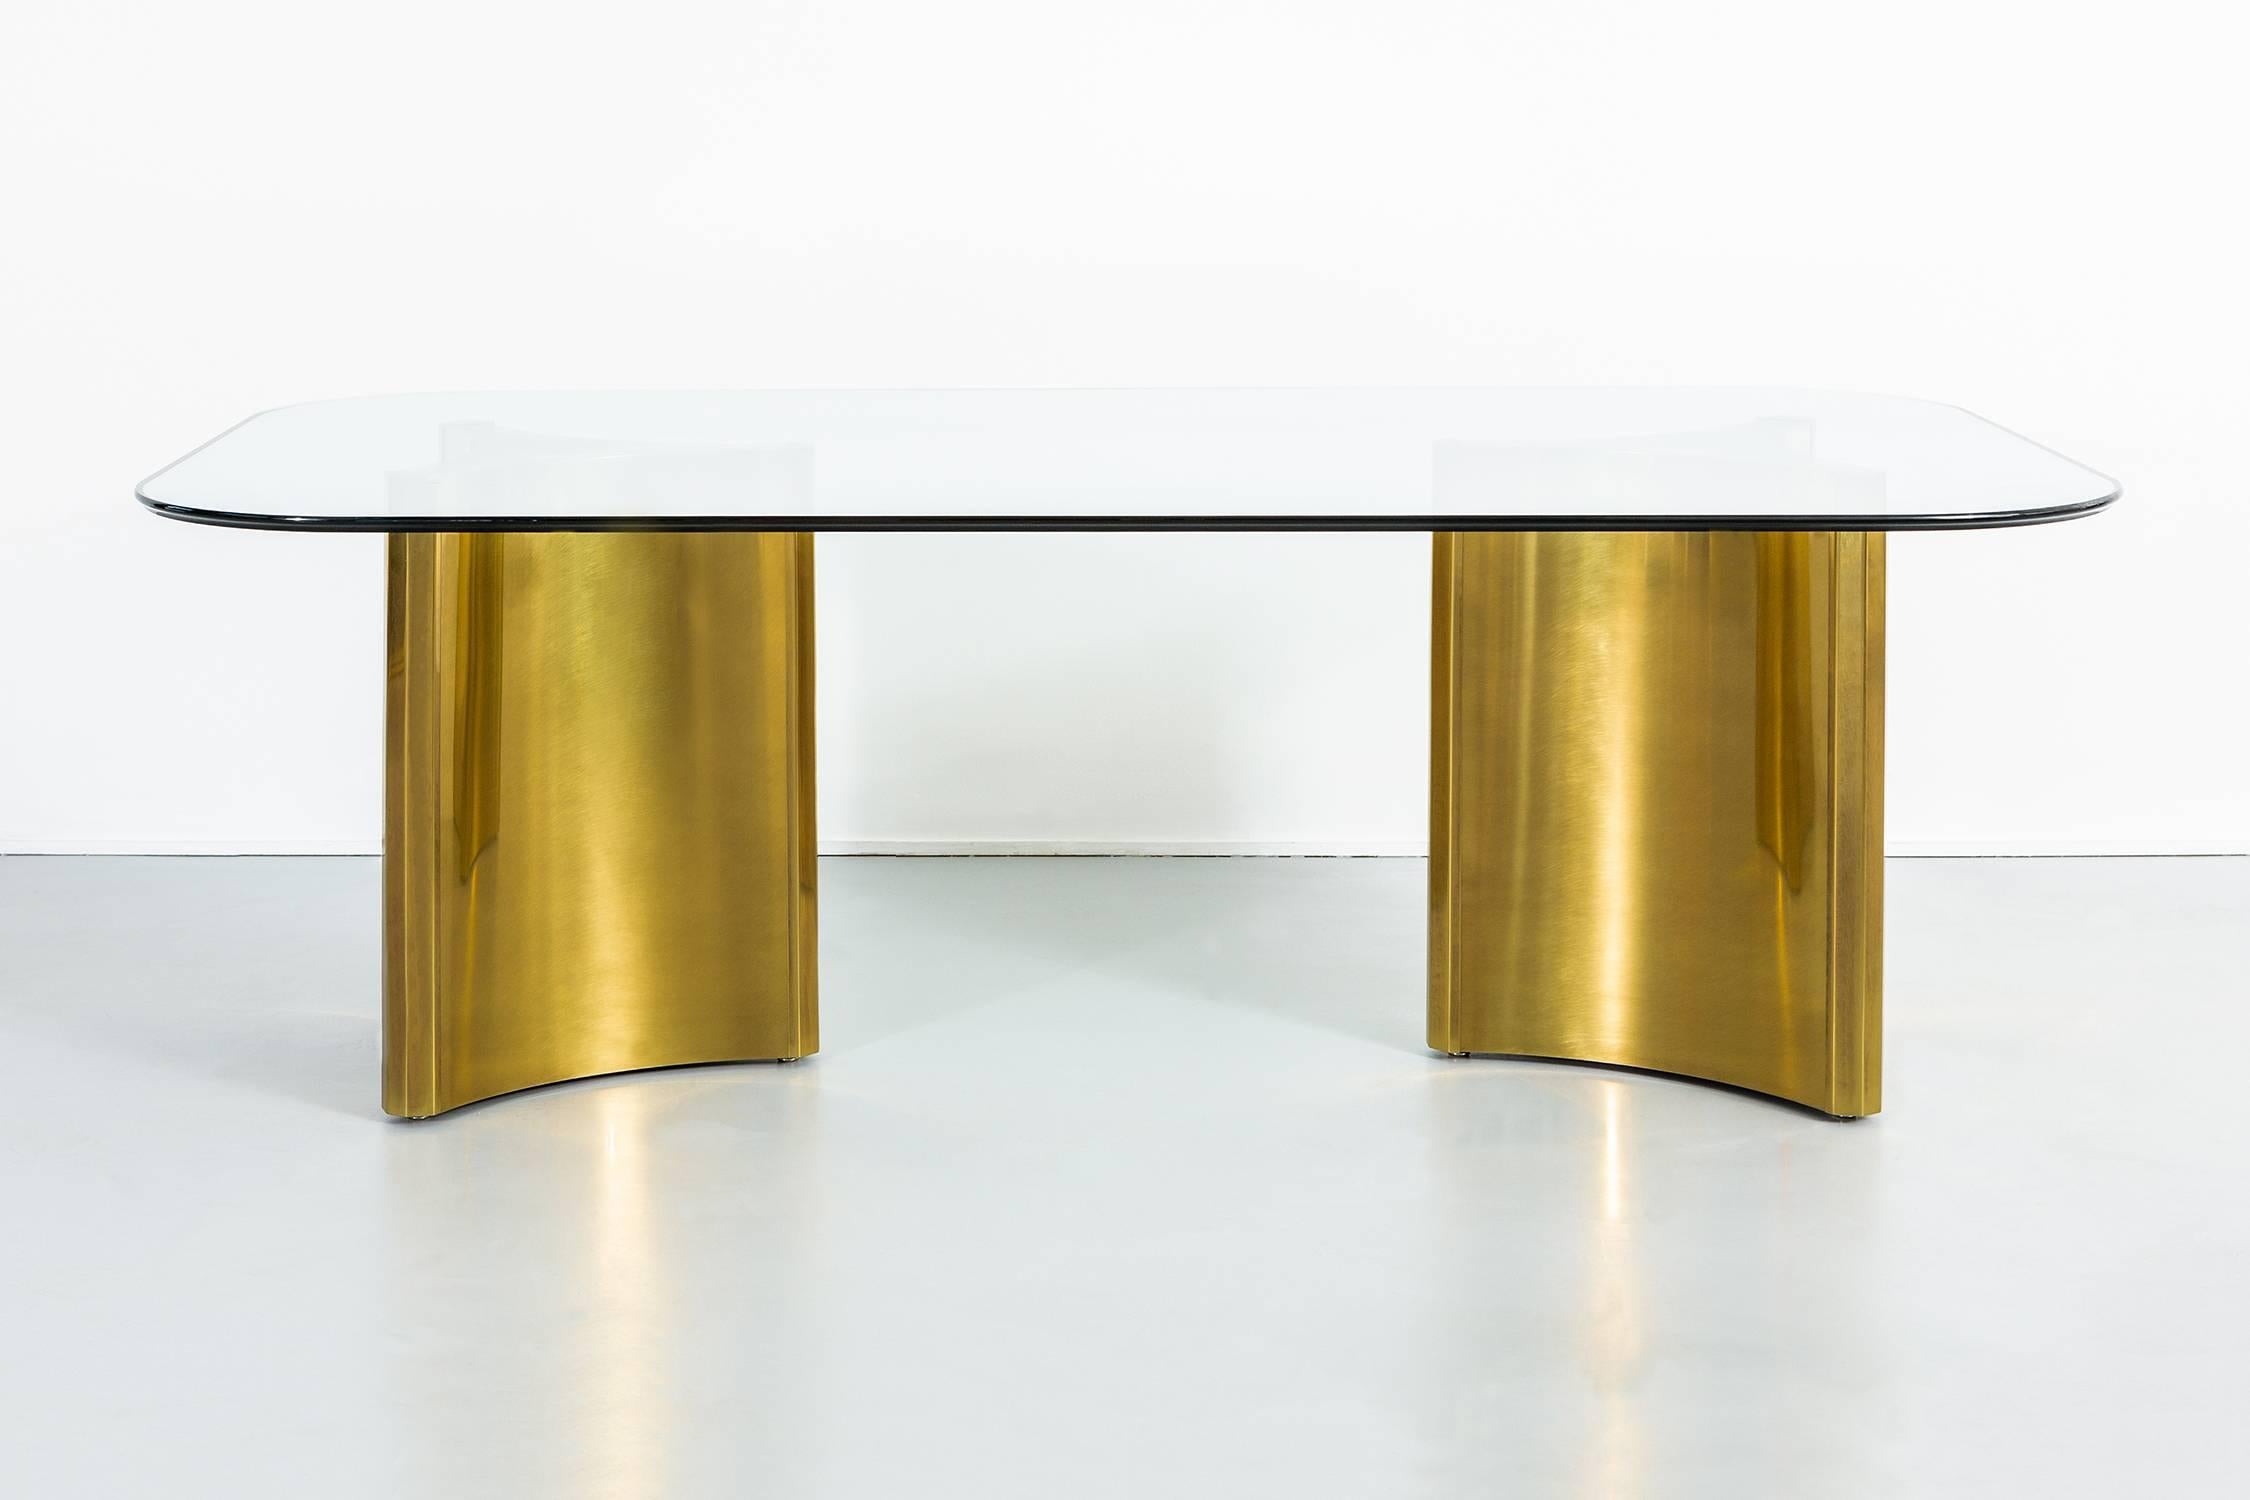 “Trilobi” double pedestal table

by Mastercraft

USA, circa 1970s

Brass and glass

Measure: Pedestals 27 ¾” H x 20 9/16” W x 18 ¾” D

table 28 ¾” H x 84” W x 48” D

glass 1” H x 84” W x 48” D.